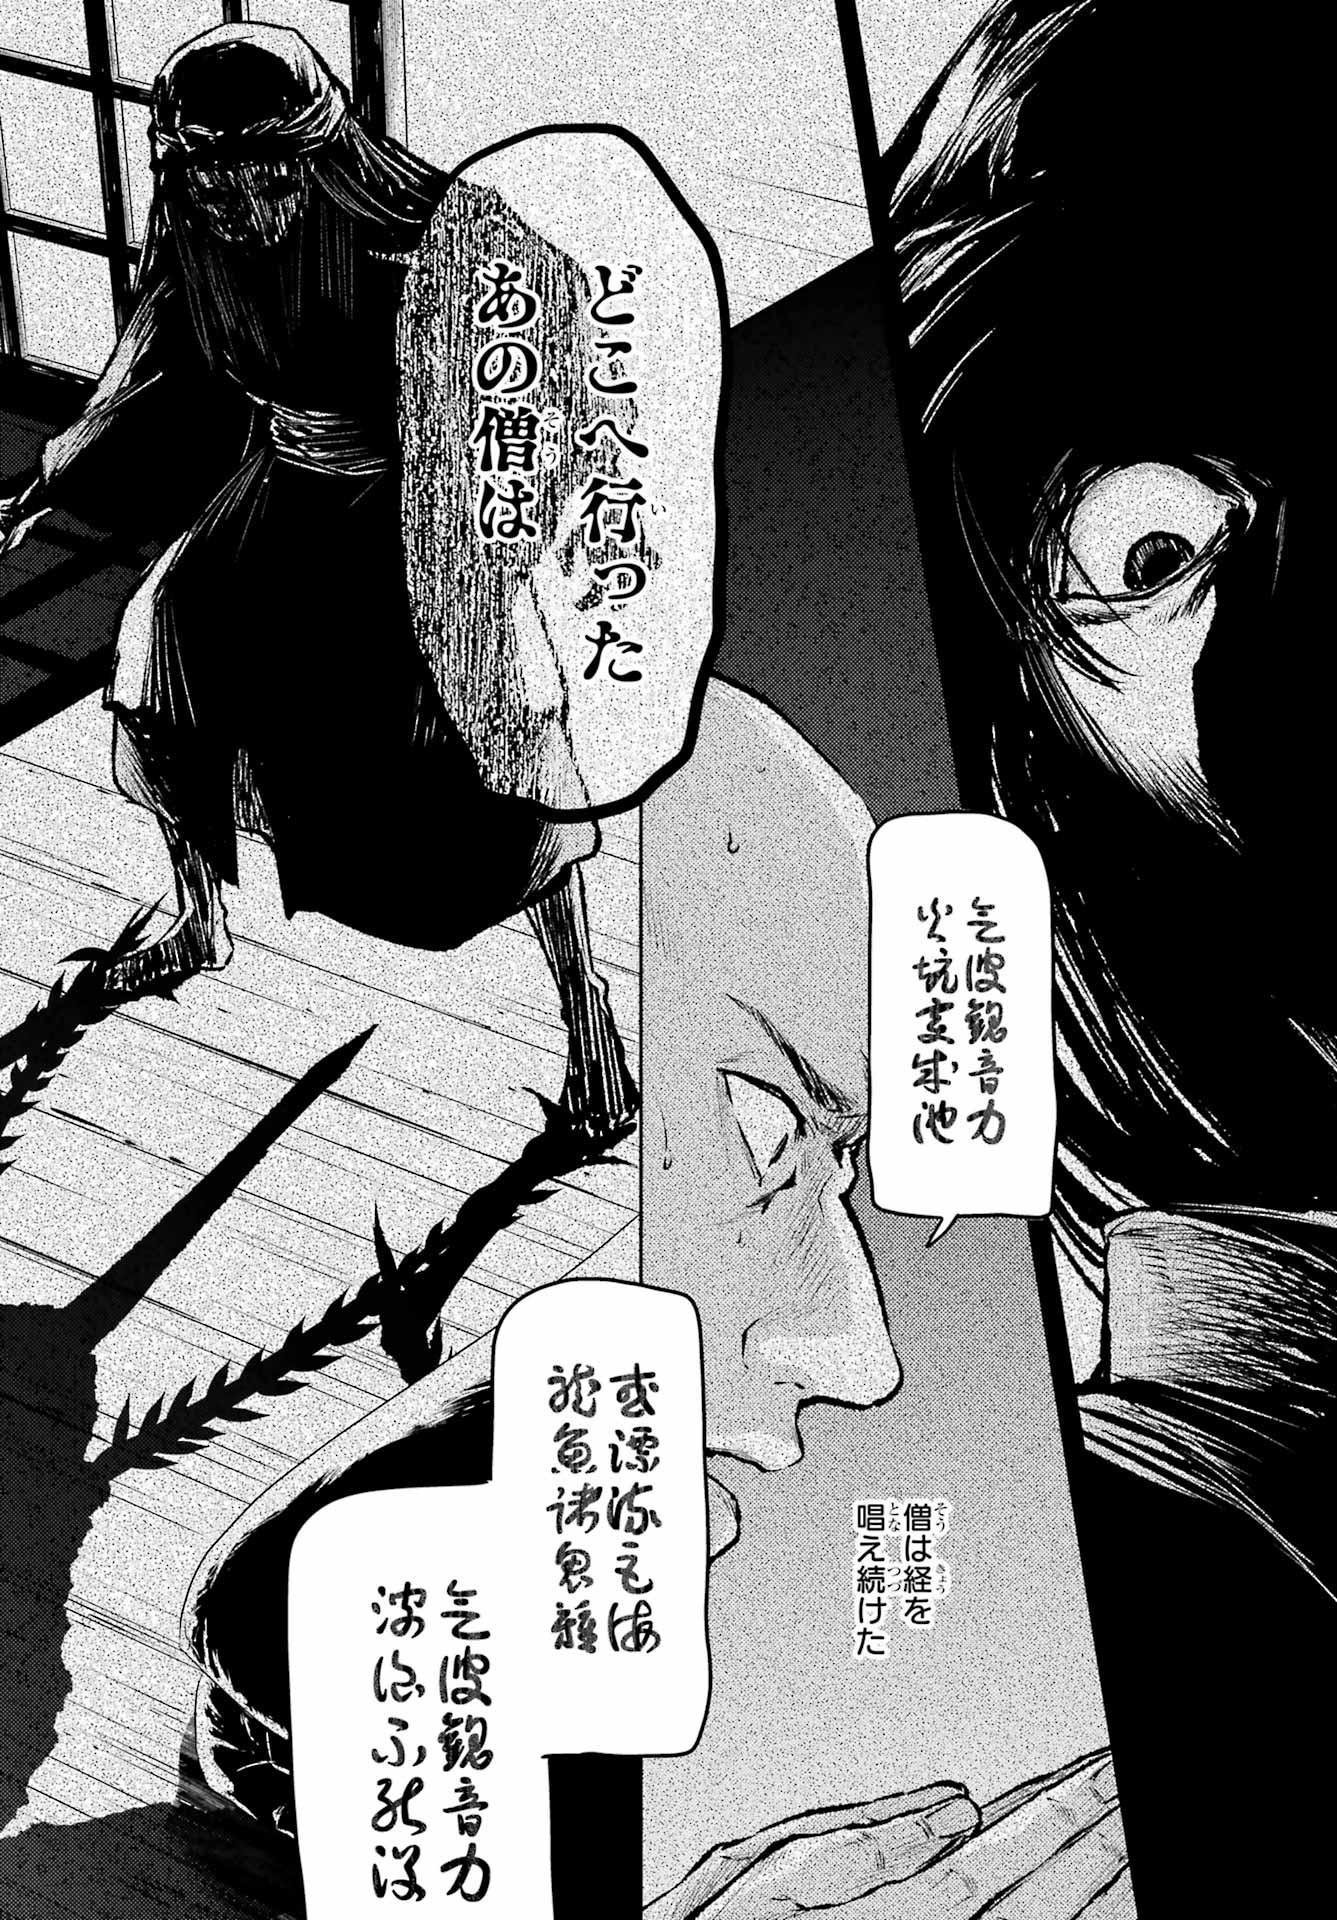 Kusuriya no Hitorigoto - Chapter 59-2 - Page 5